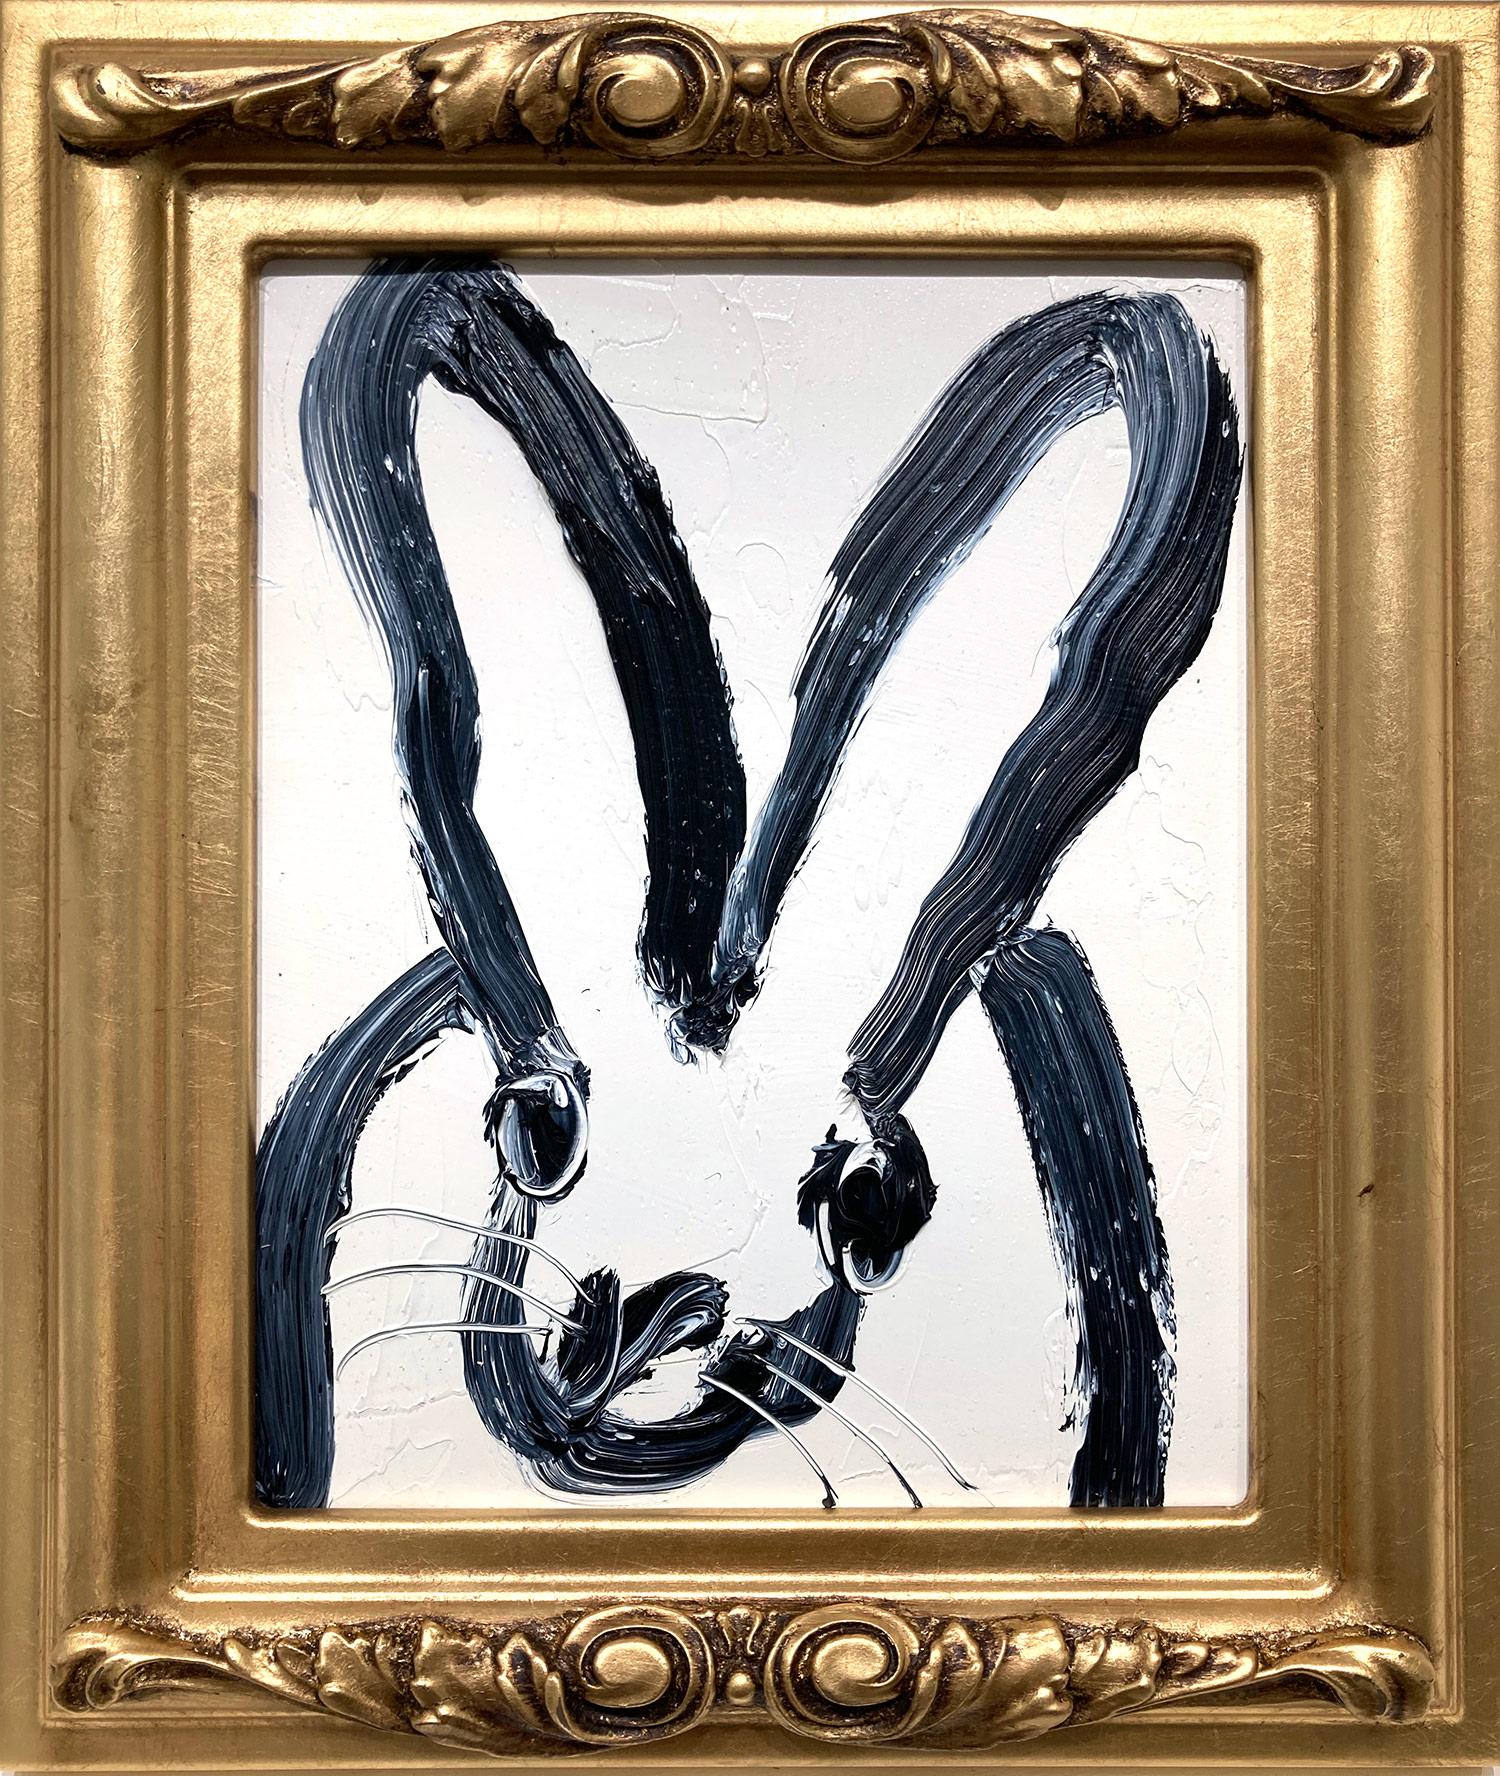 Hunt Slonem Animal Painting - "Barnaby" Black Bunny on White Background Oil Painting on Wood Panel Framed